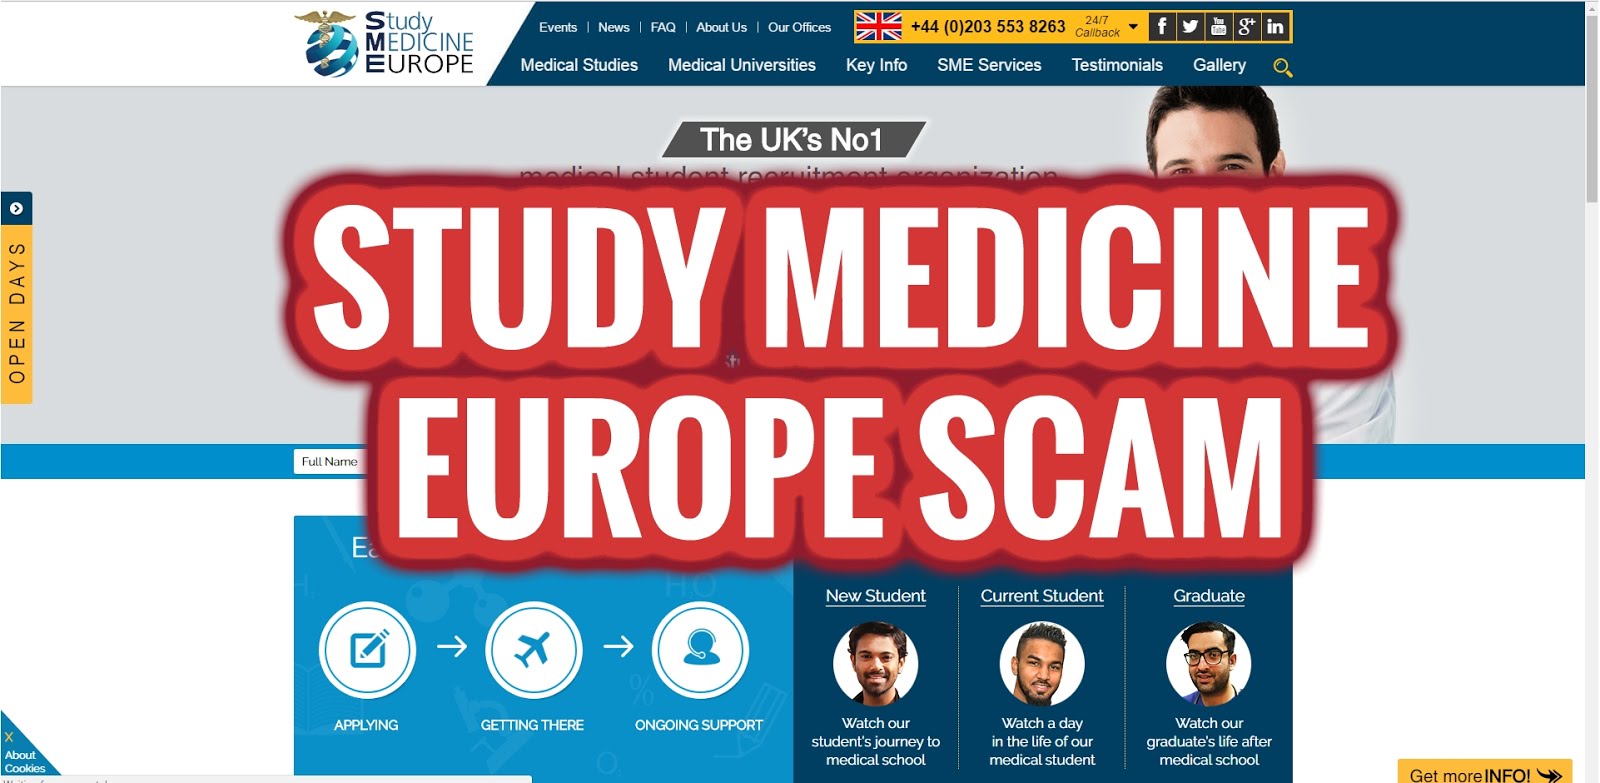 Study Medicine Europe Scam